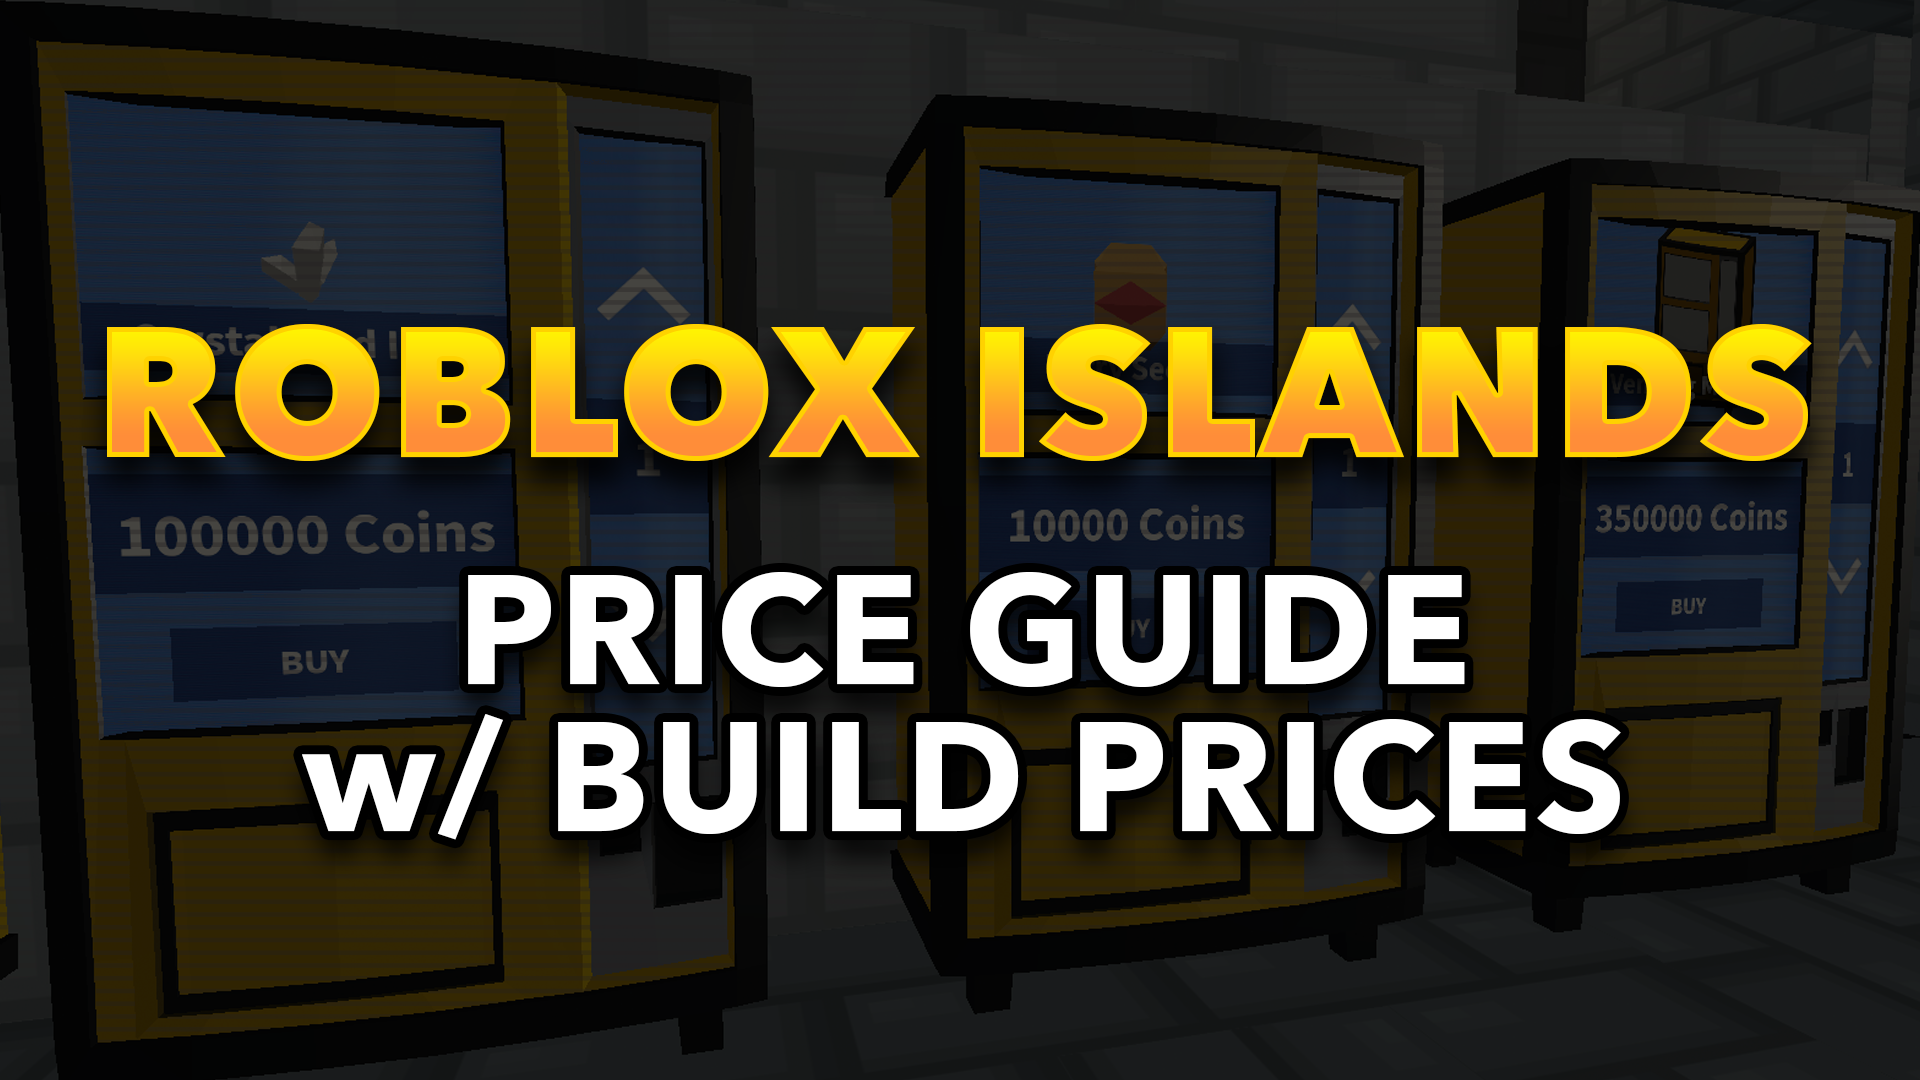 Complete Roblox Islands Price Guide Last Update Sept 20 2020 - roblox update 2020